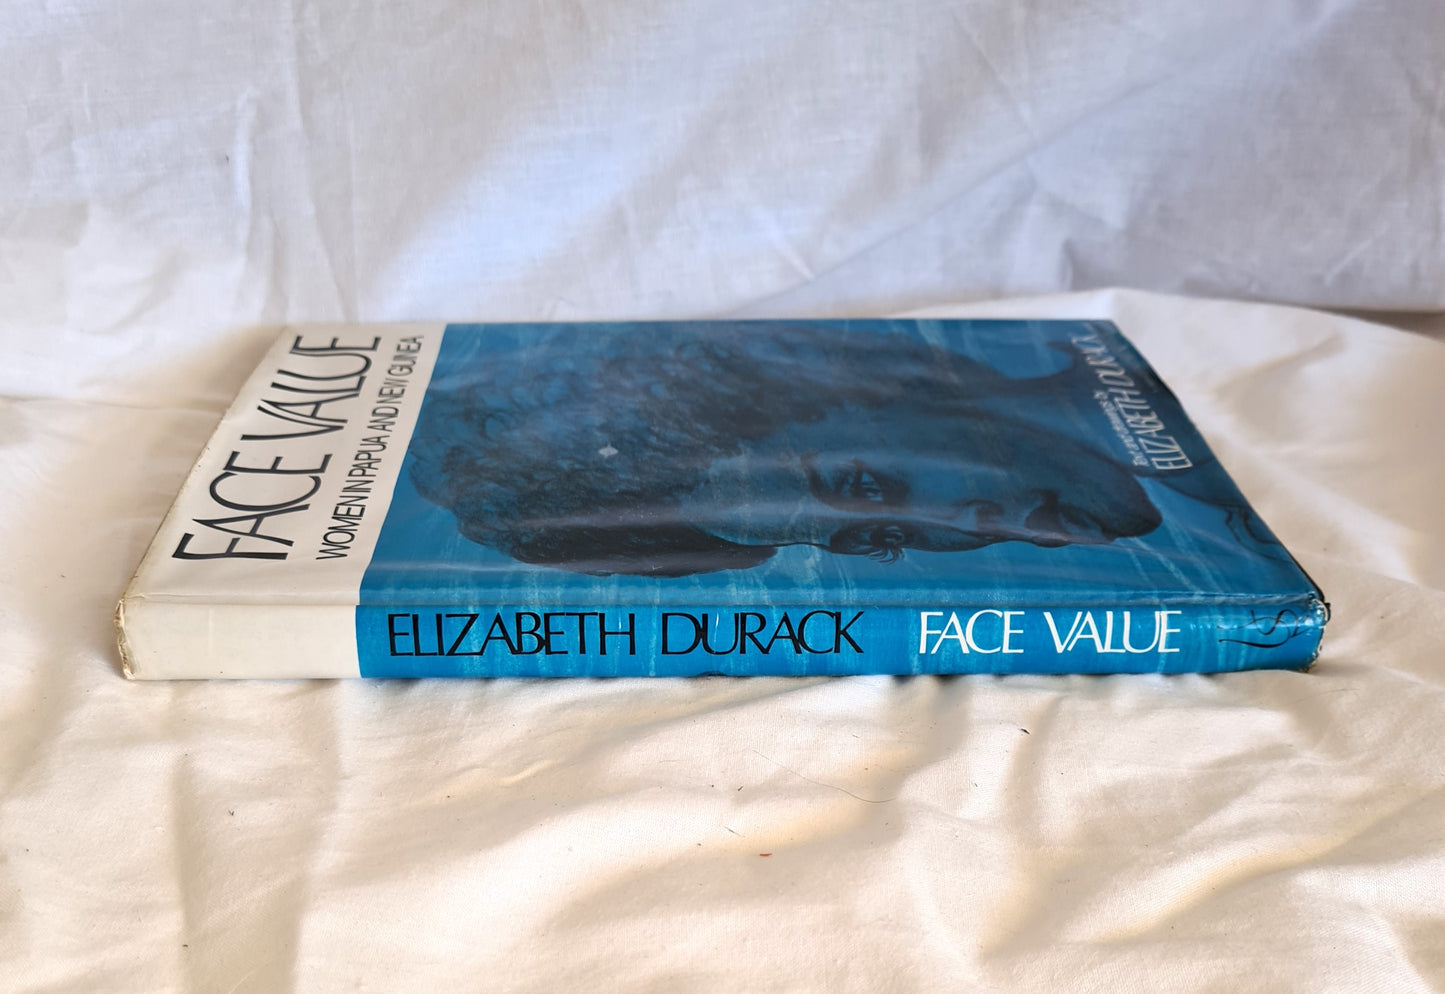 Face Value by Elizabeth Durack